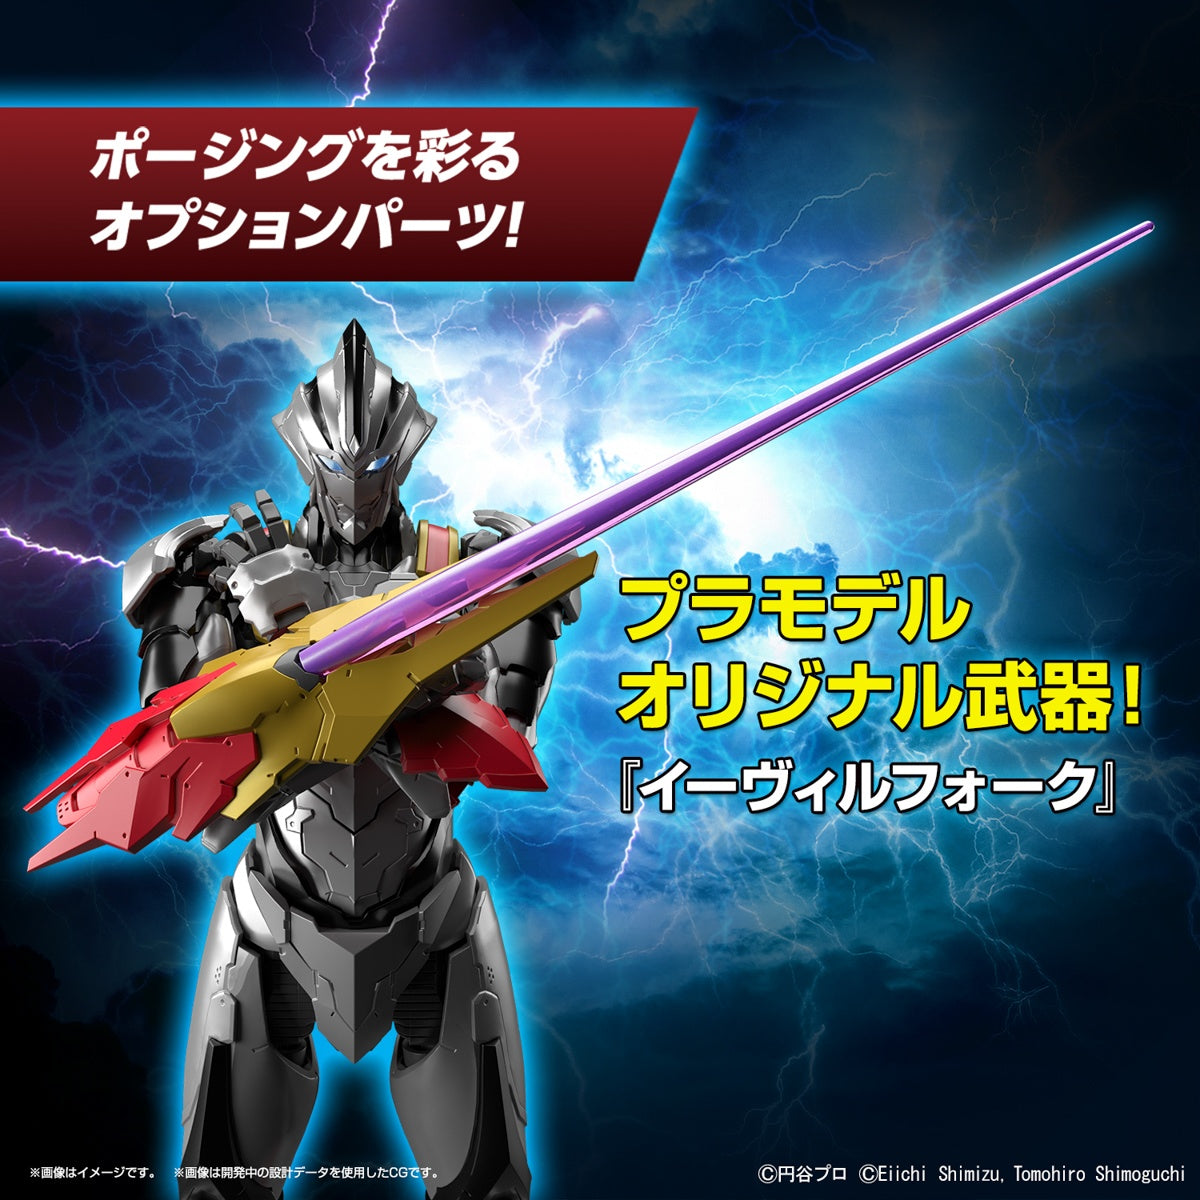 Figure Rise Standard Ultraman Suit Evil Tiga Action-Bandai-Ace Cards &amp; Collectibles